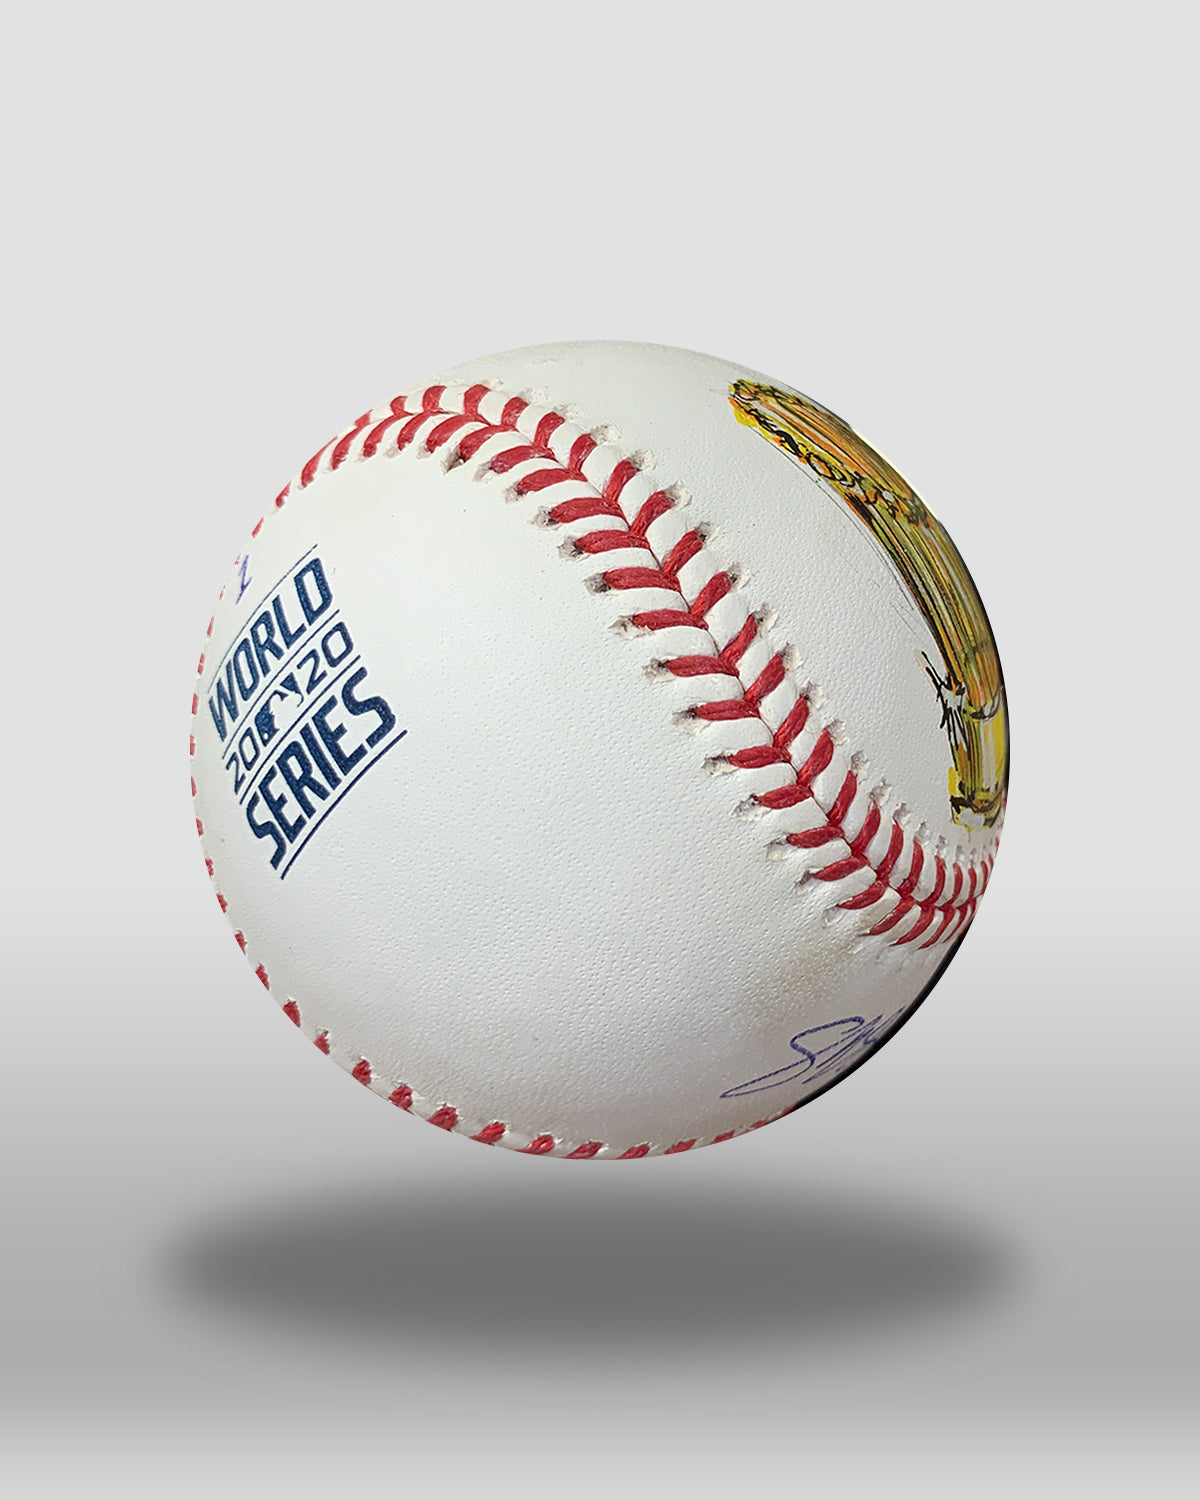 World Series Trophy 2020 Hand-Painted Baseball Art – S. Preston